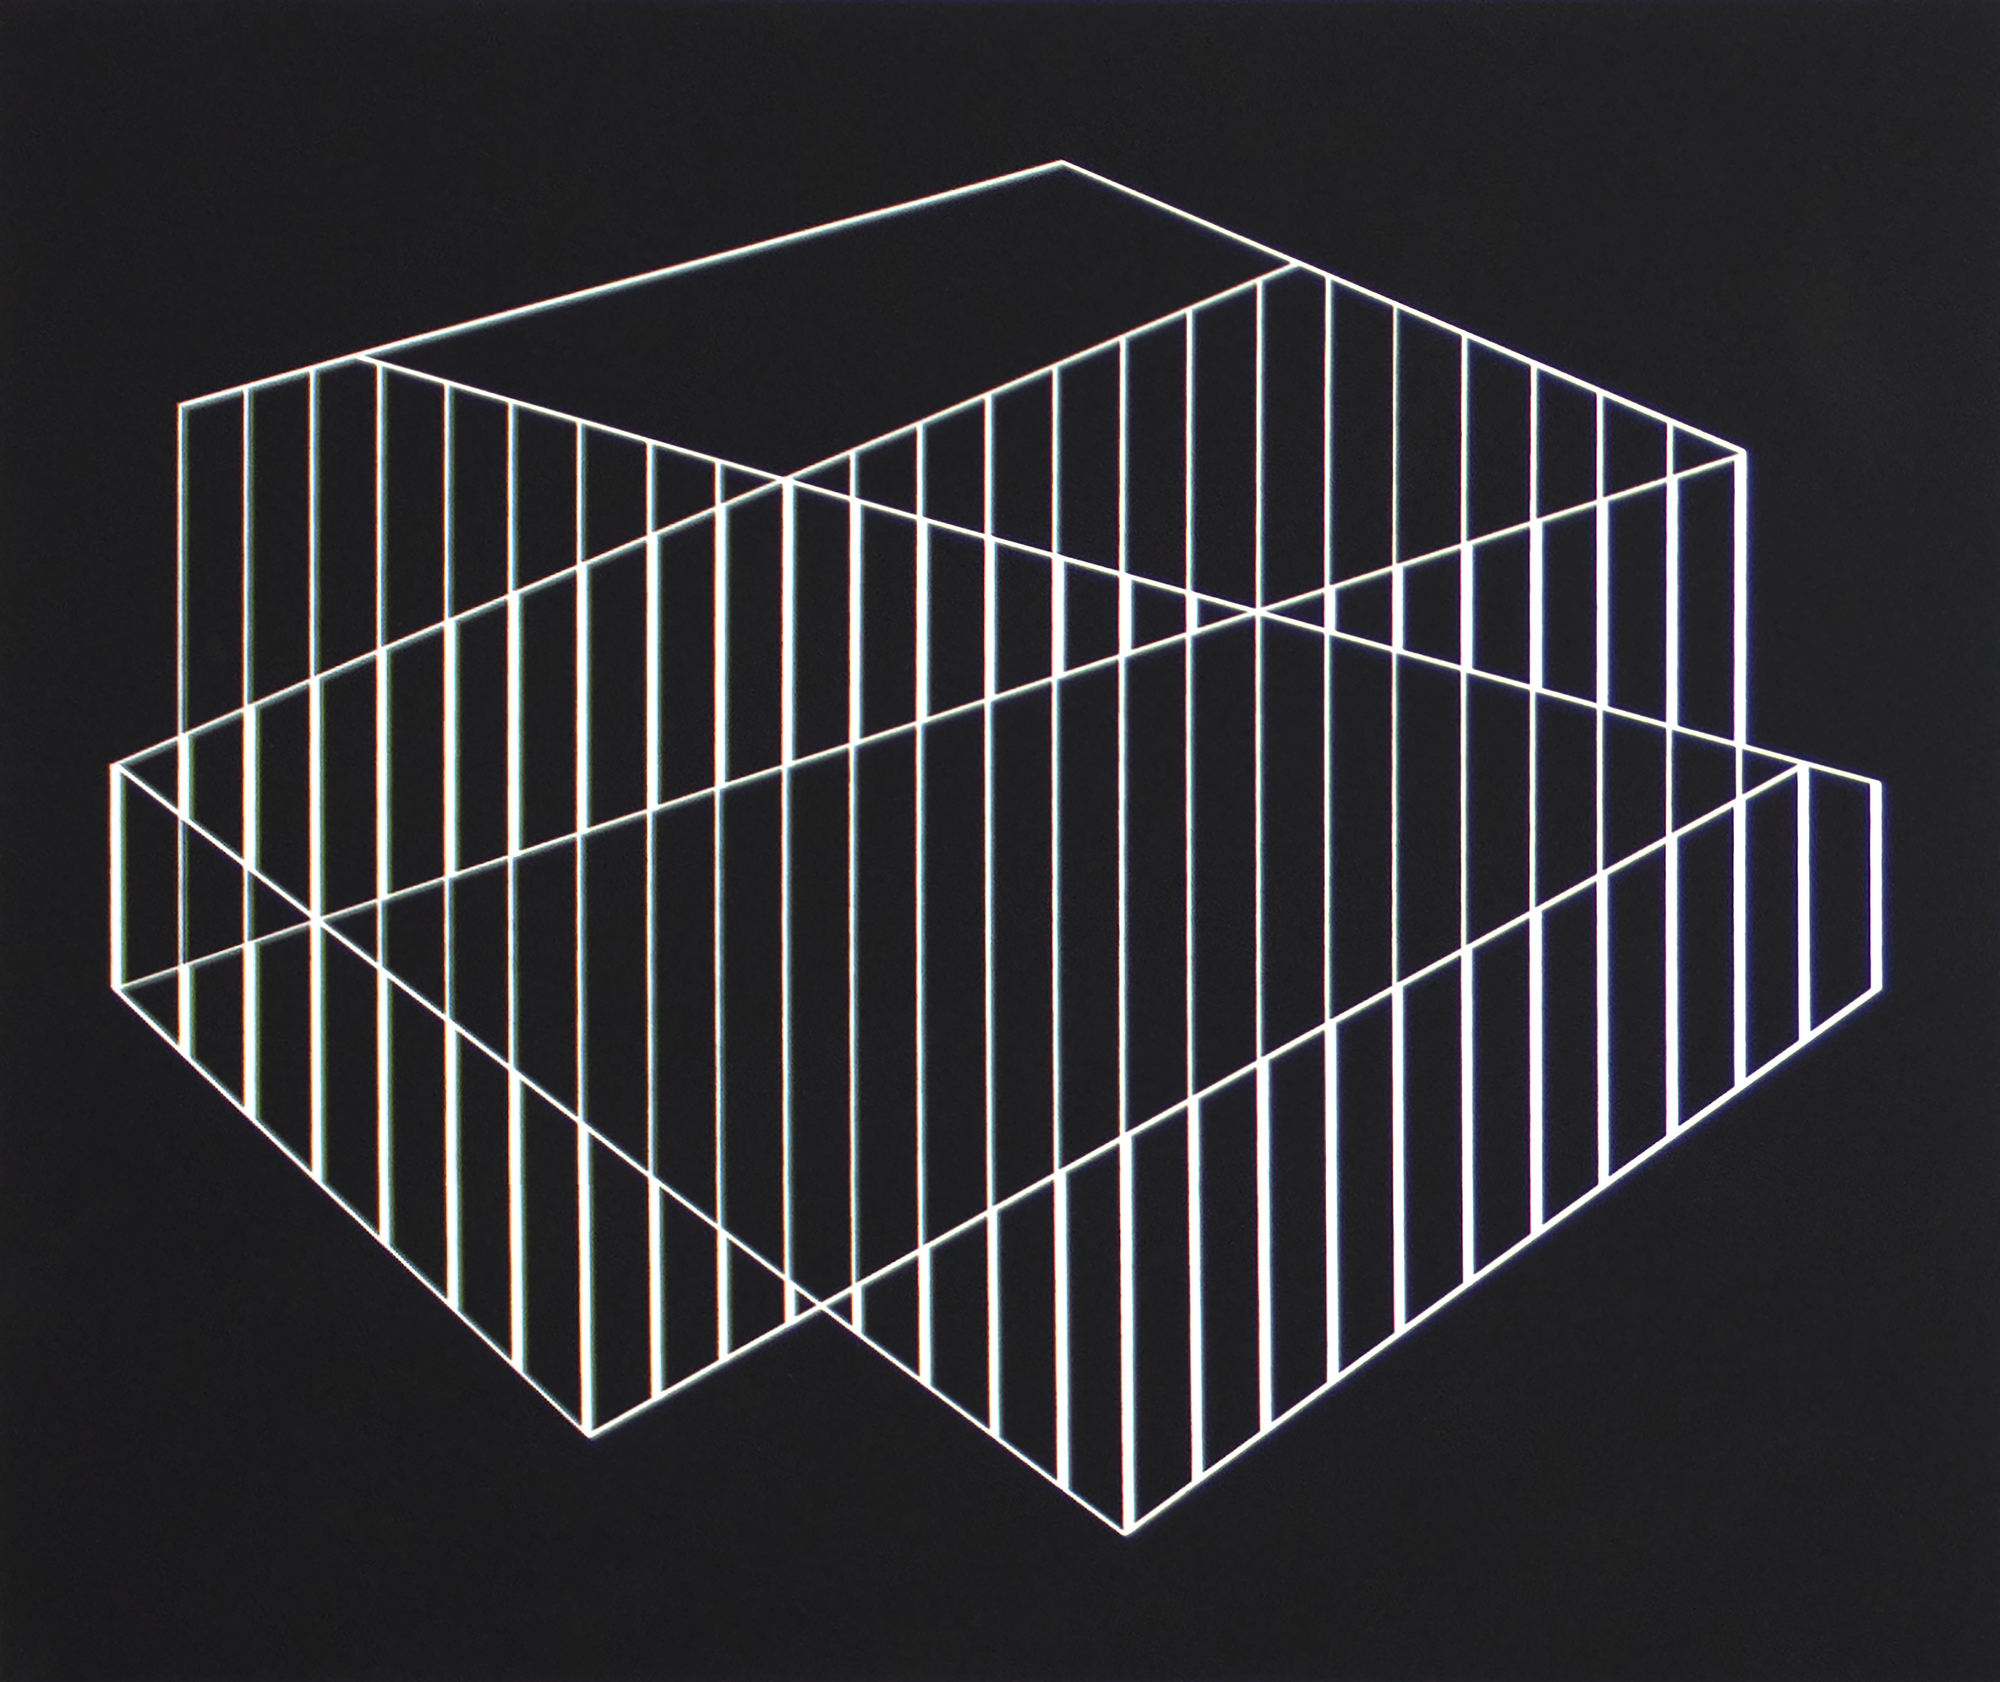 JOSEF ALBERS - Formulation: Articulation - screenprint - 12 x 14 5/8 in. ea.